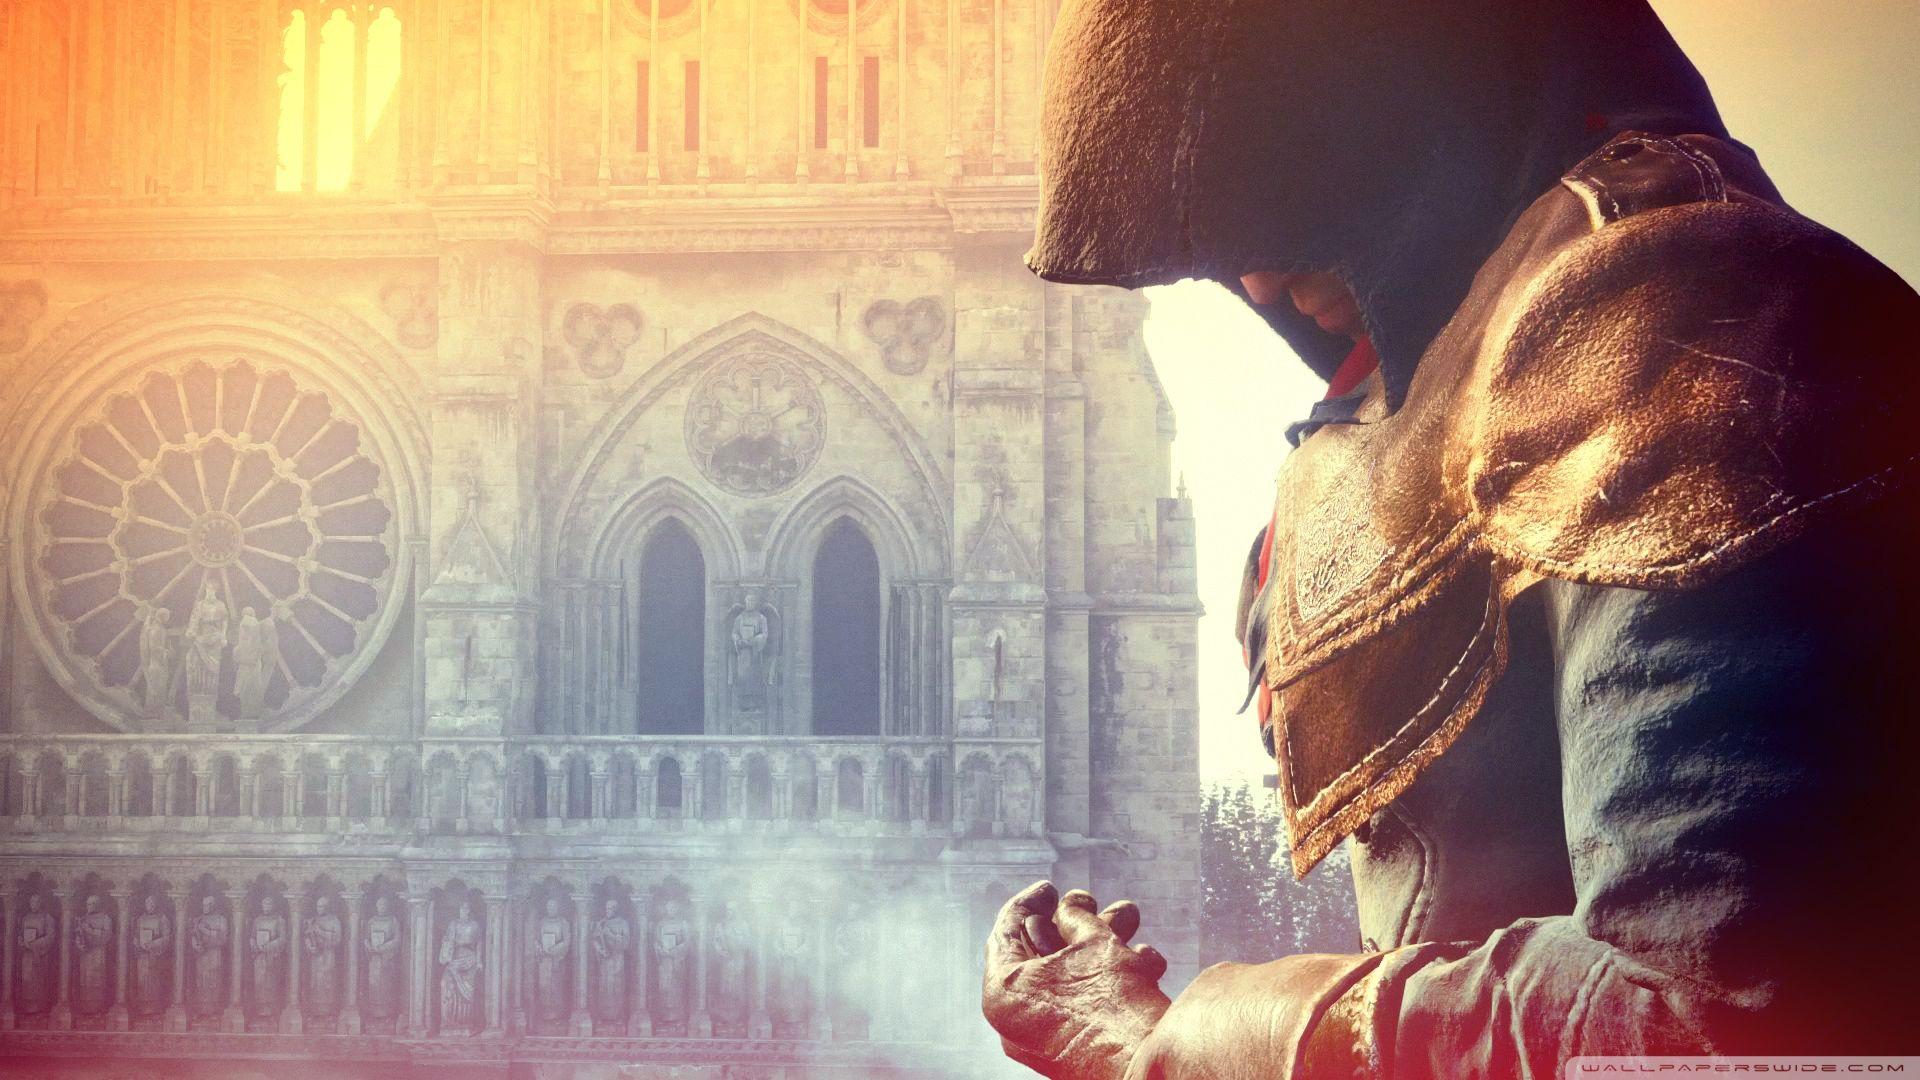 Assassin&;s Creed Unity Video Game 2014 HD desktop wallpaper, High